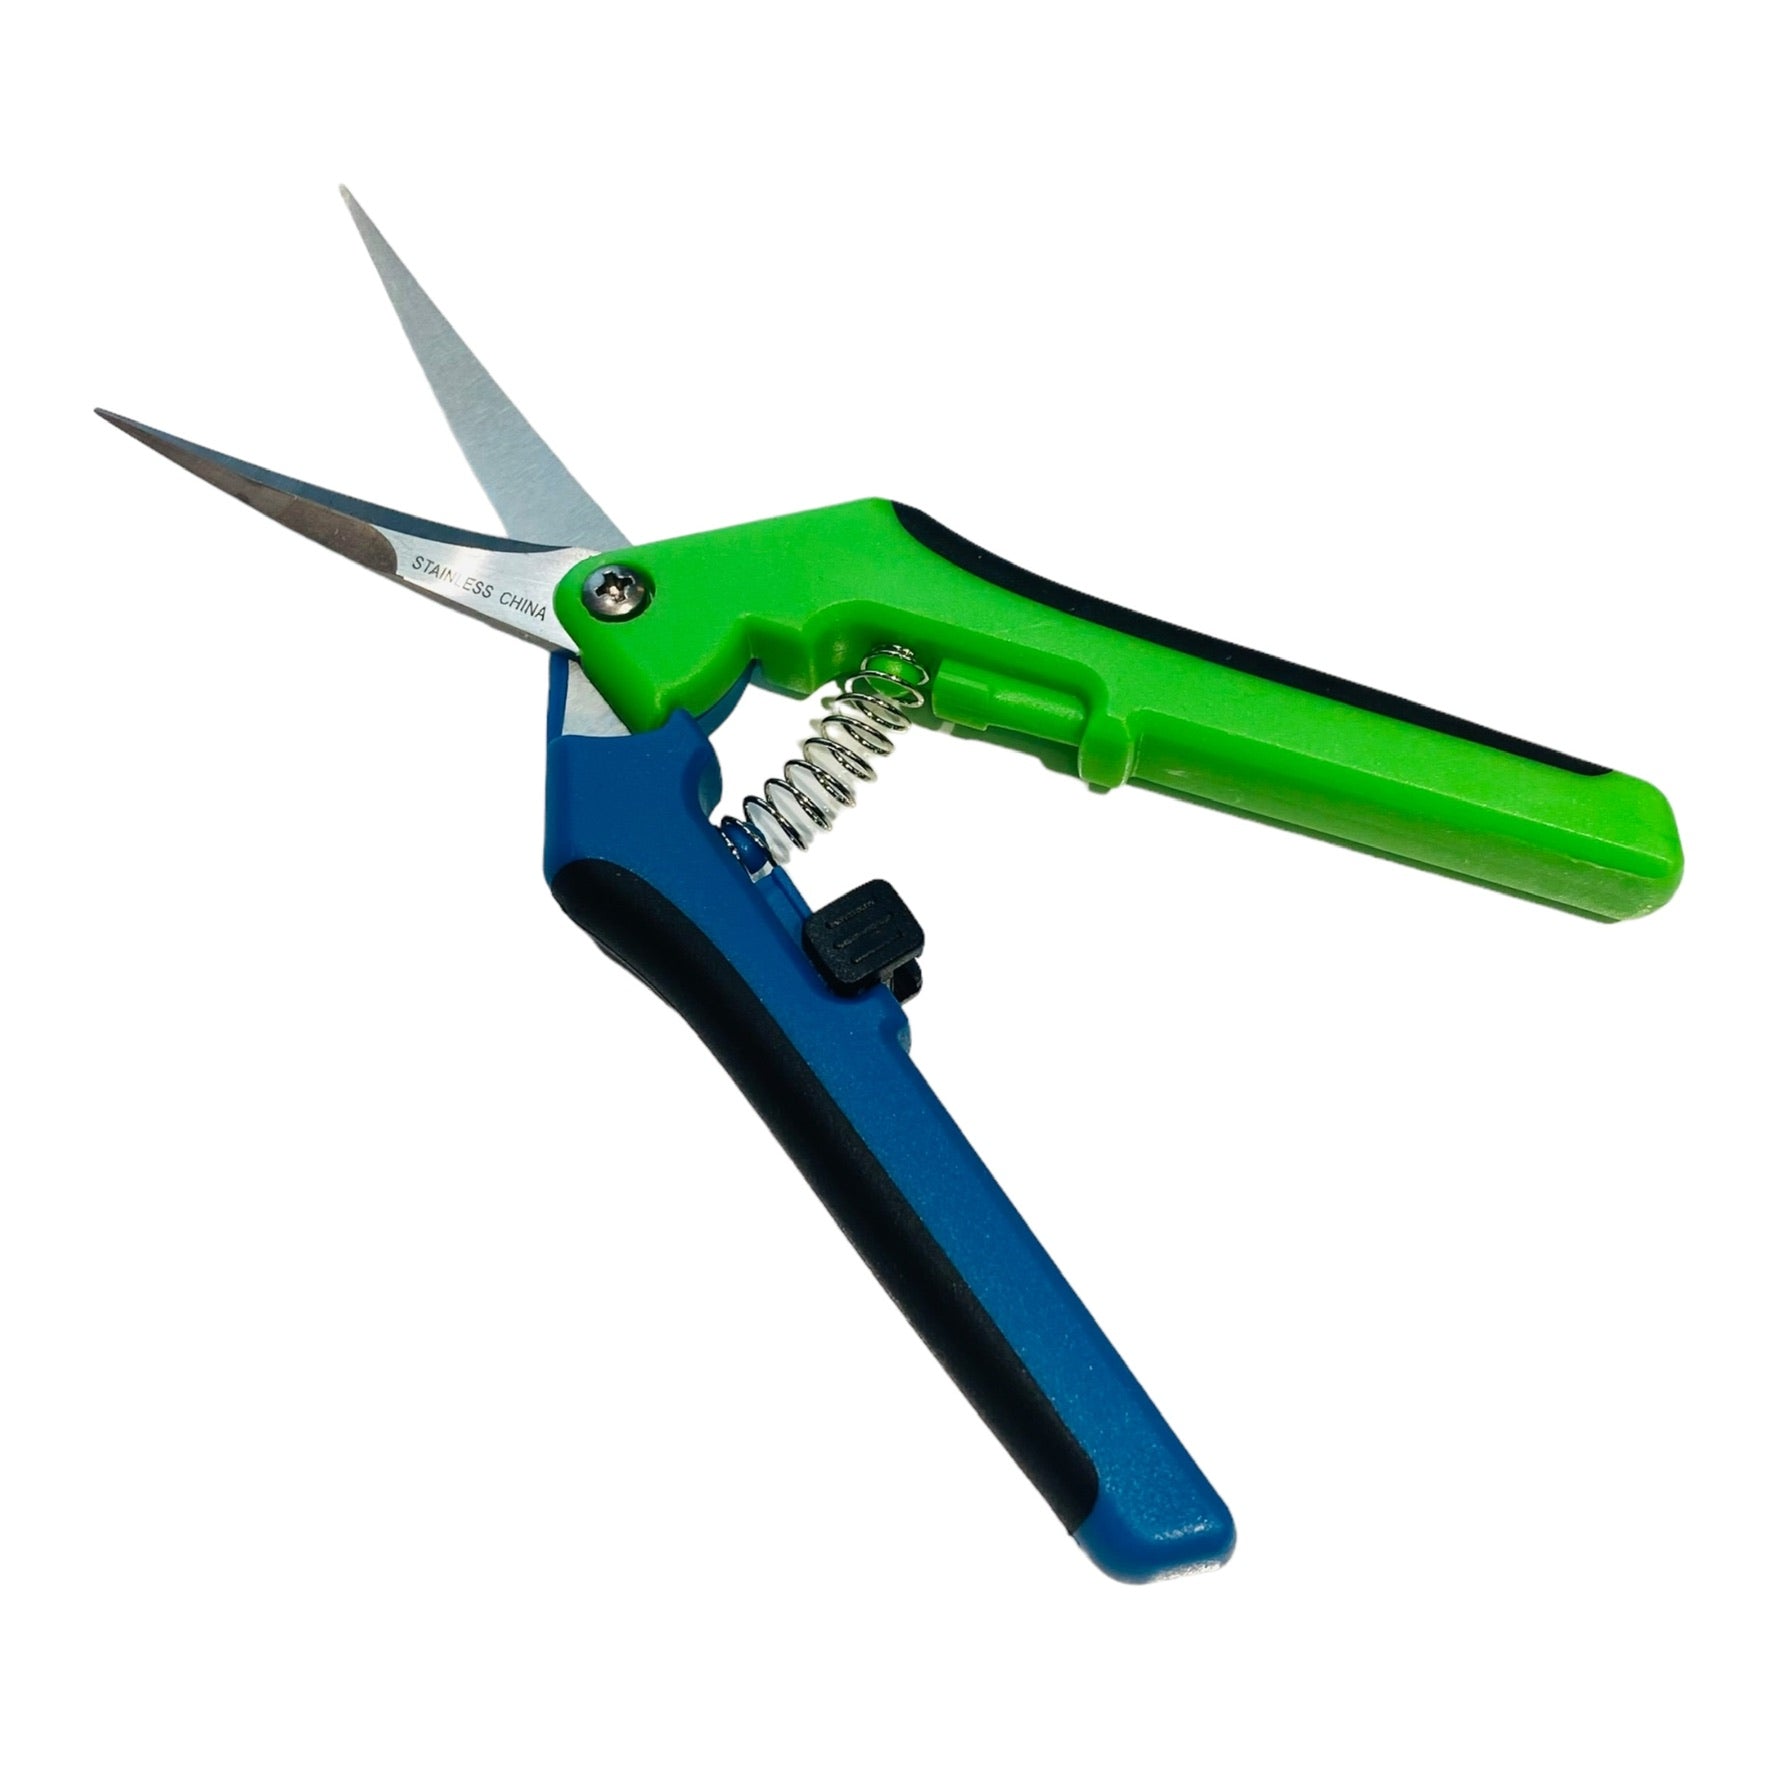 The Green Scissors - Premium Snips - Curved Blade